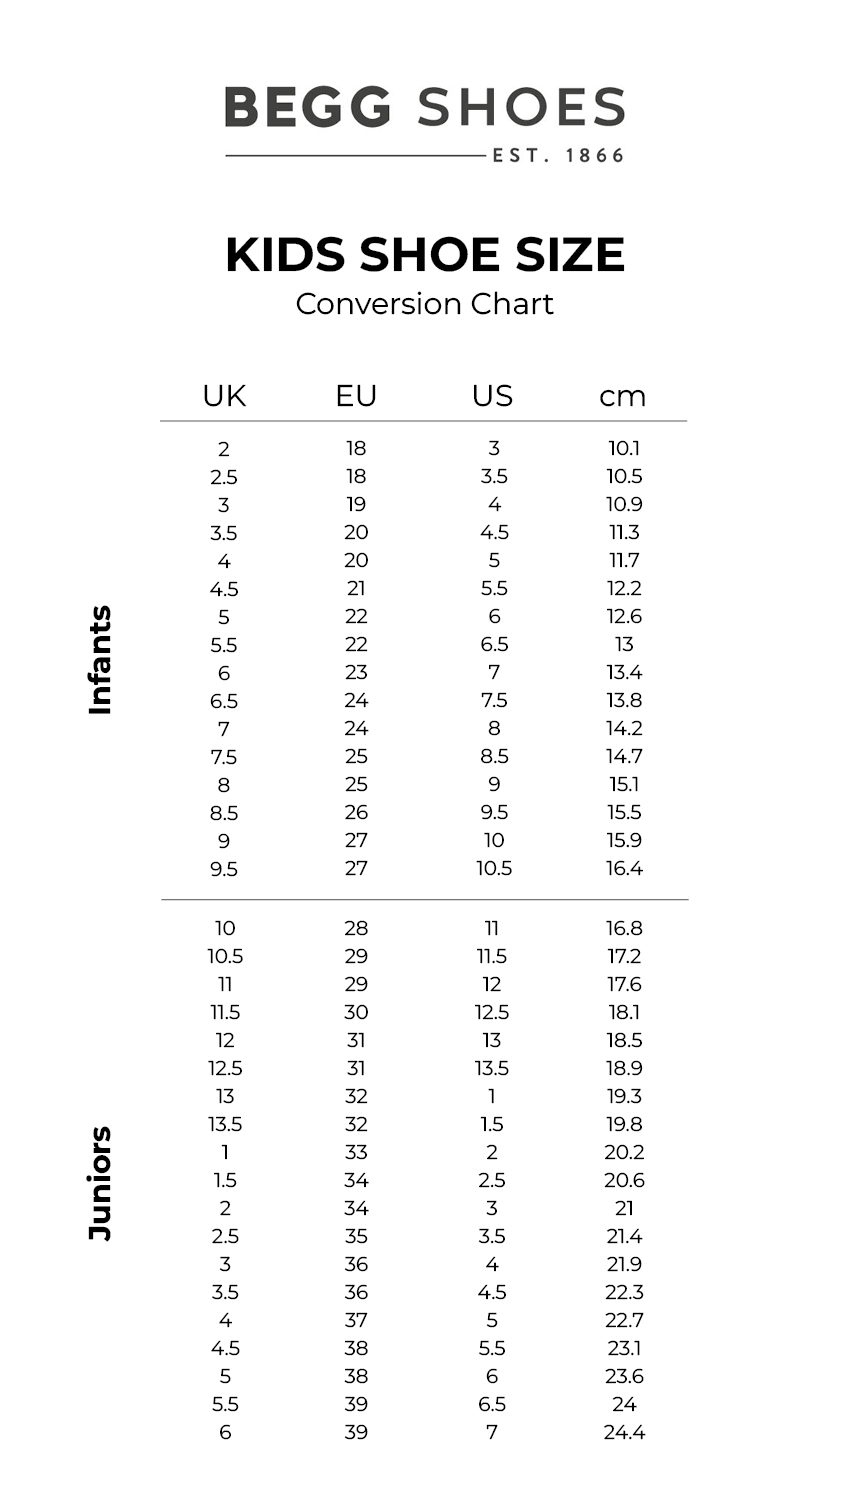 Kids Shoe Size Conversion Chart - Convert UK, EU, US & CM